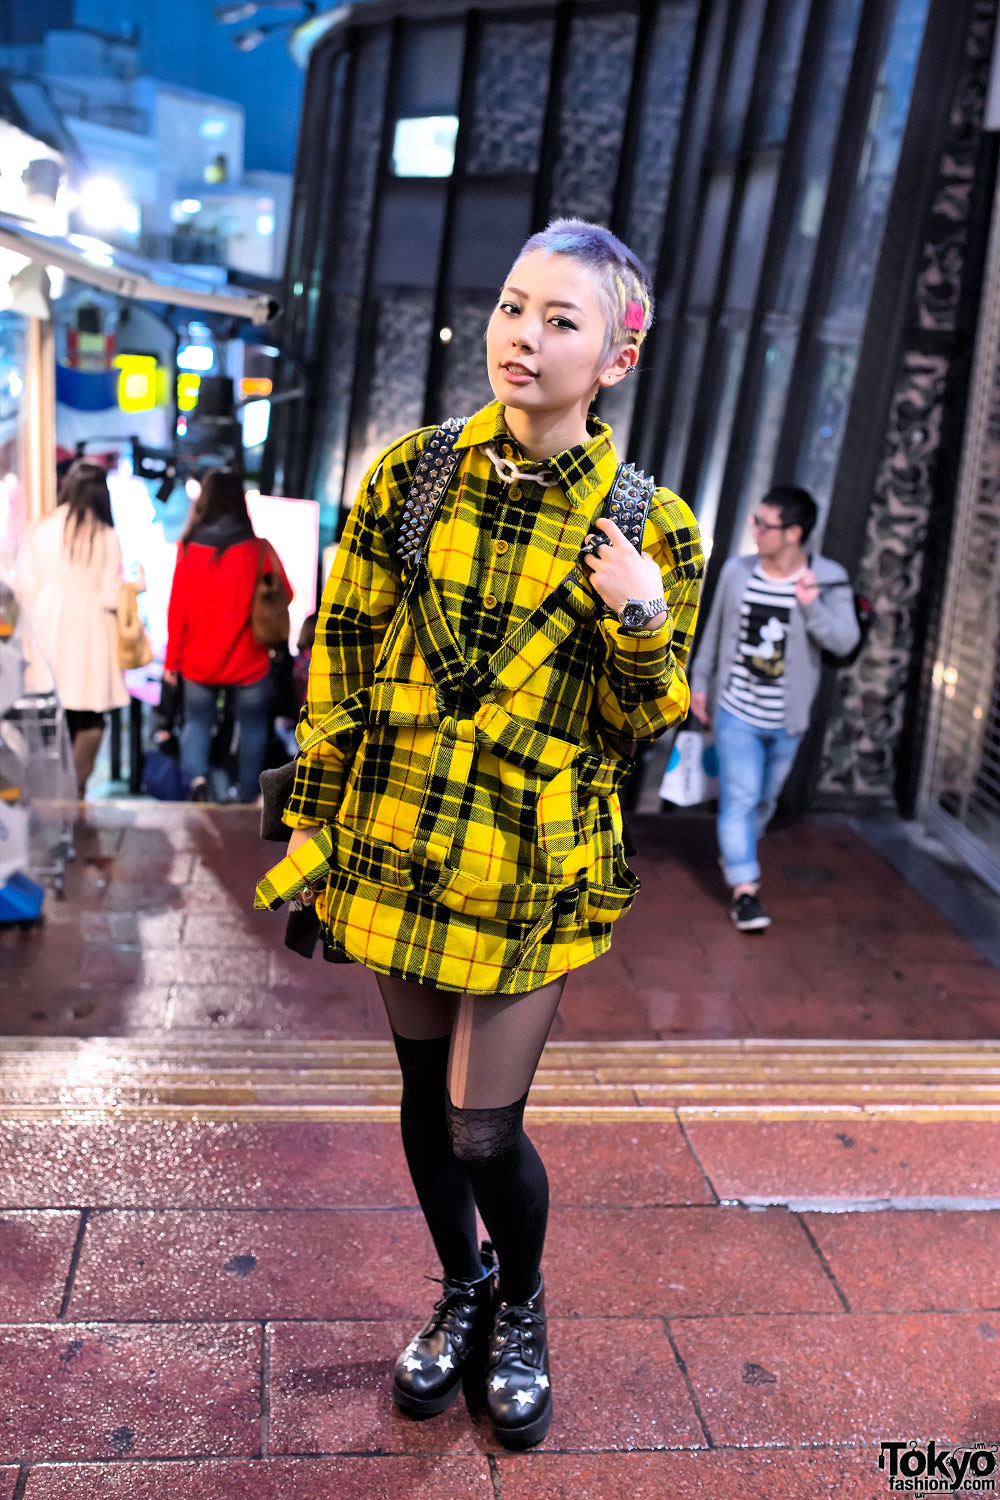 Kaoru In Shibuya W Colorful Shaved Hair Jimsinn Harness Top Glad News Tokyo Fashion